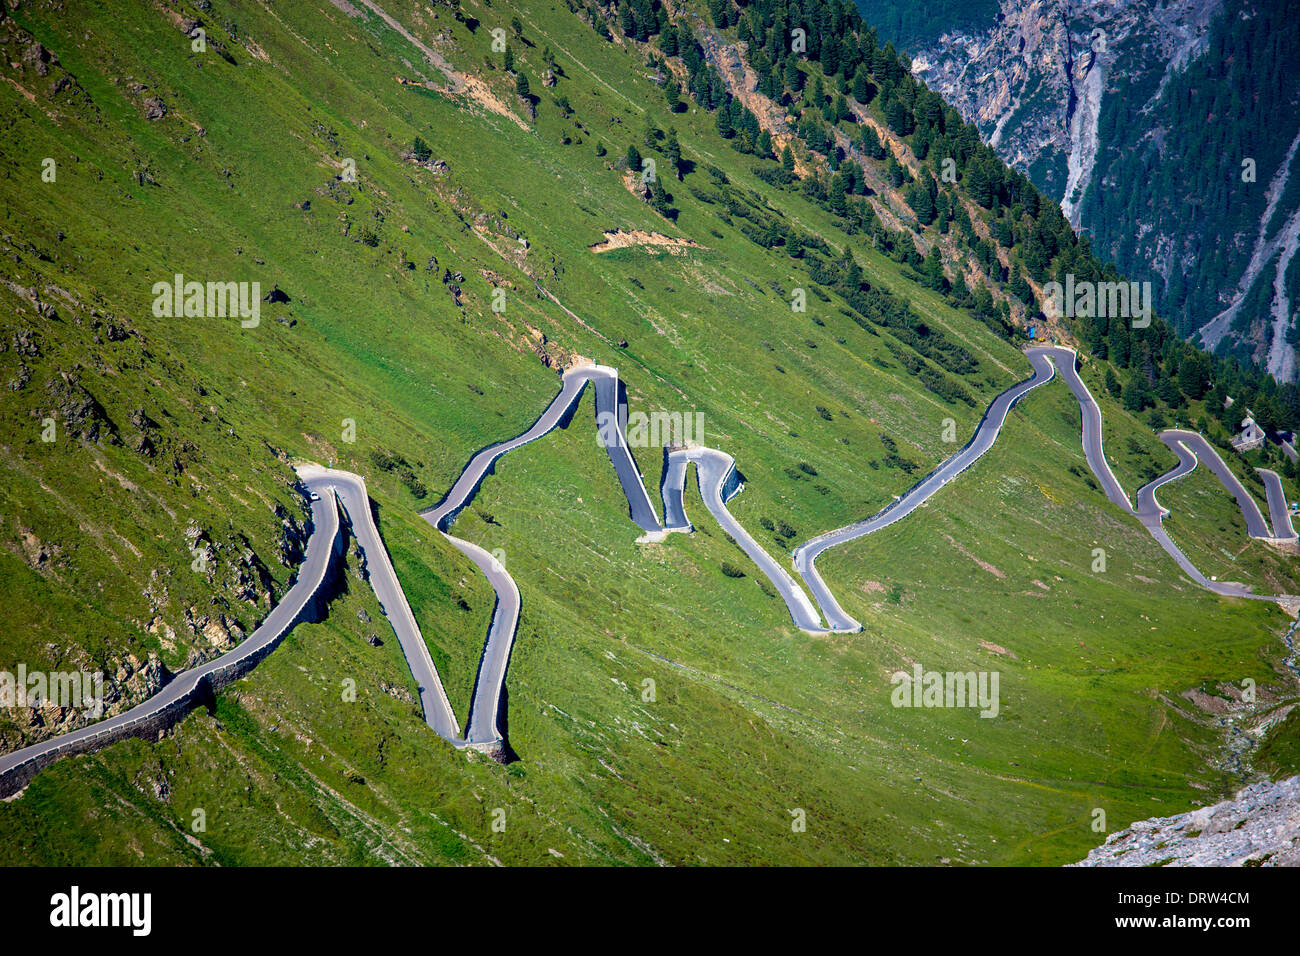 Cars on The Stelvio Pass, Passo dello Stelvio, Stilfser Joch, on the route towards Bormio in the Eastern Alps in Northern Italy Stock Photo